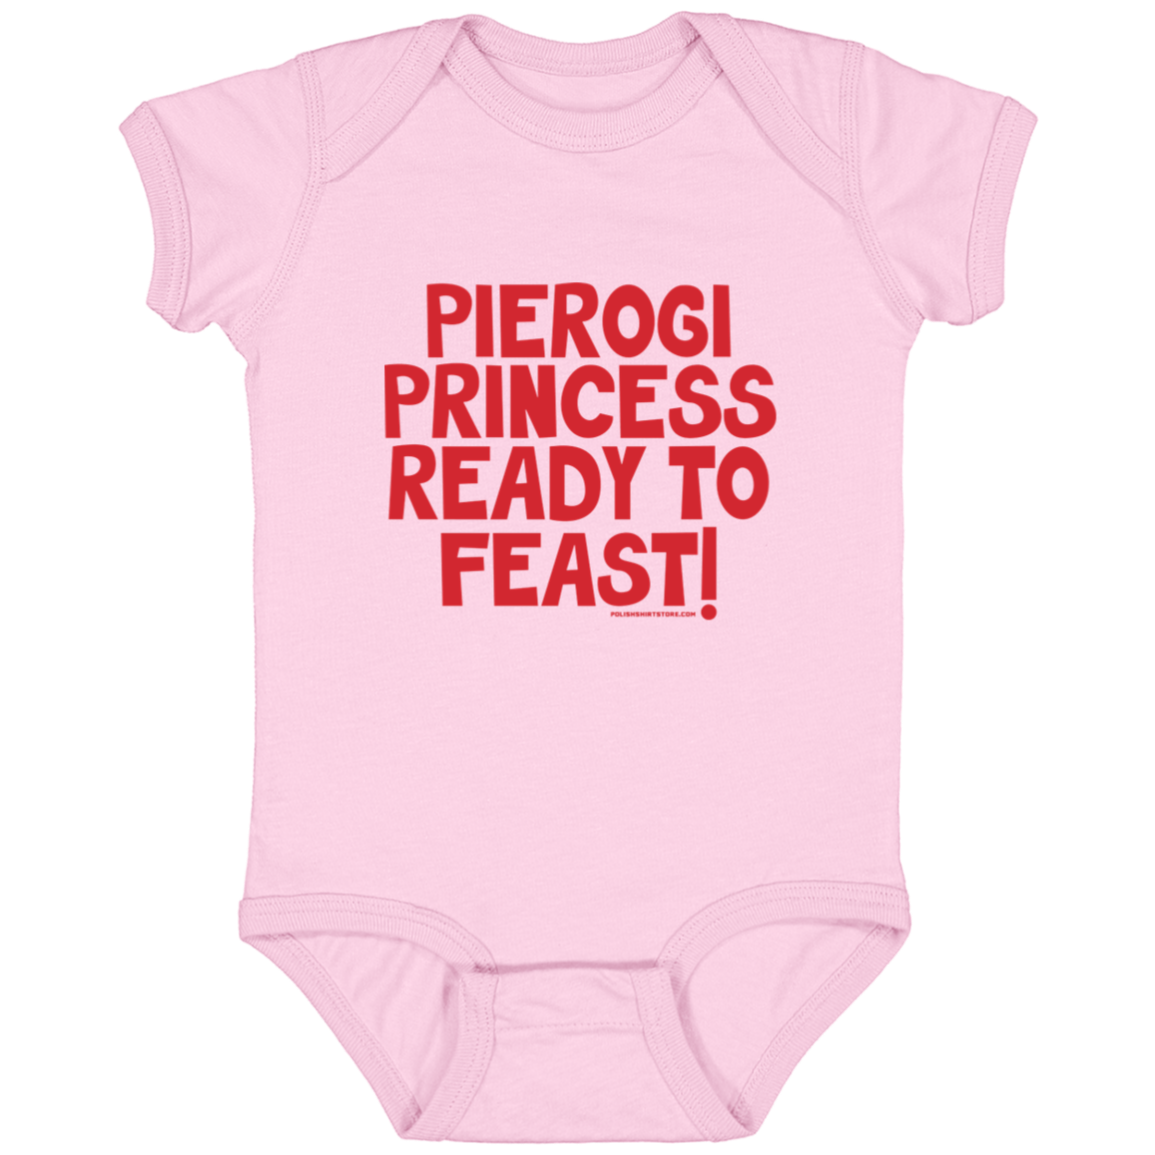 Pierogi Princess Ready To Feast Infant Bodysuit Baby CustomCat Pink Newborn 